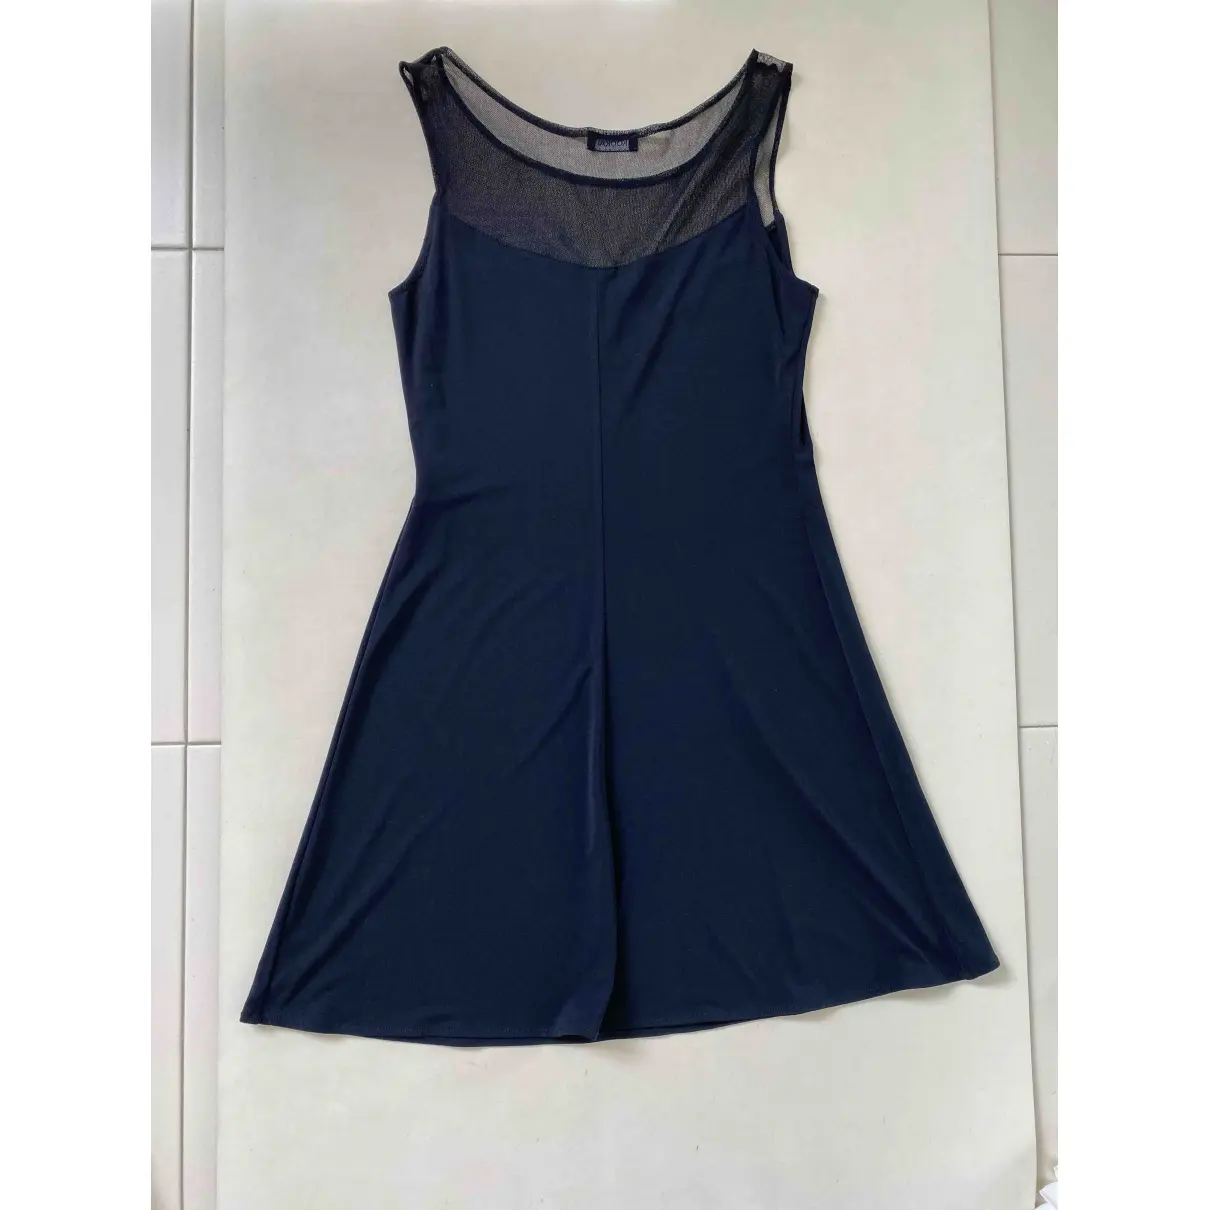 Buy KOOKAI Mid-length dress online